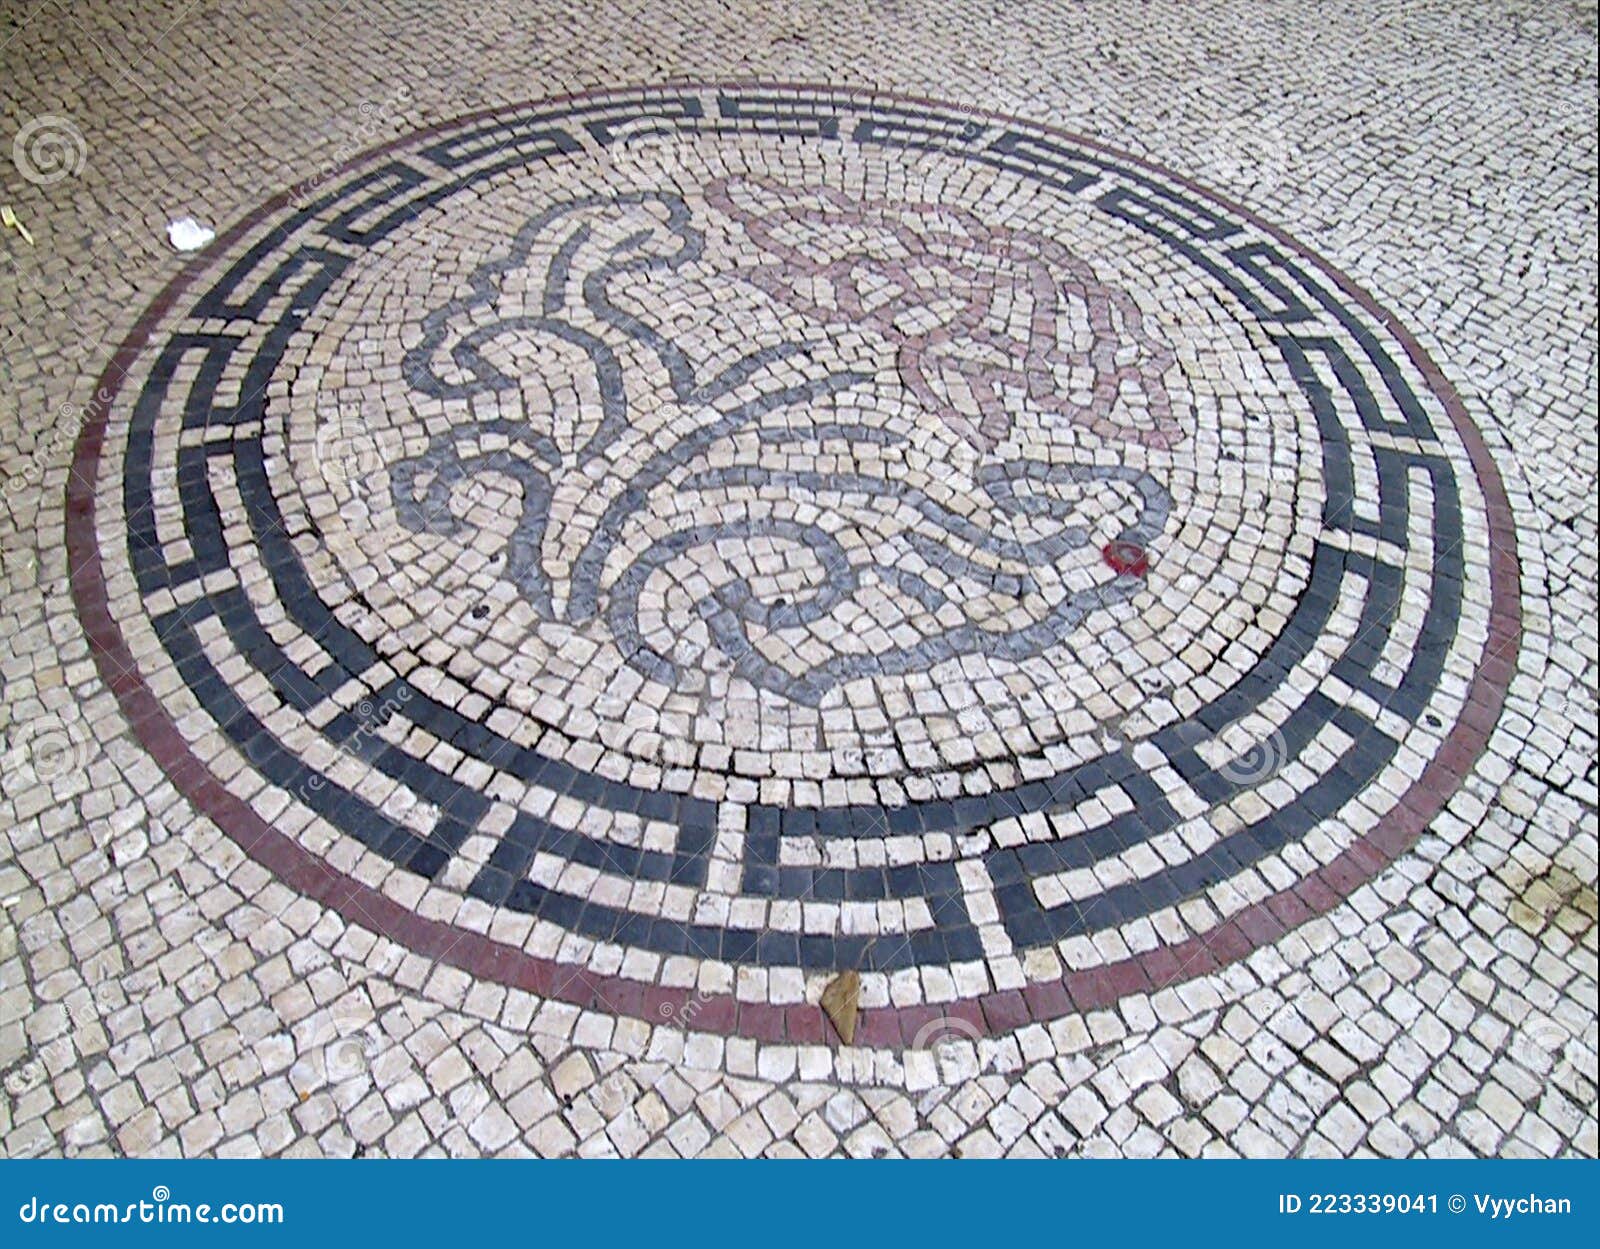 portuguese macau mosaic macao mosaico cobblestone street pavement old taipa village pei tai temple taoism religious pattern deco